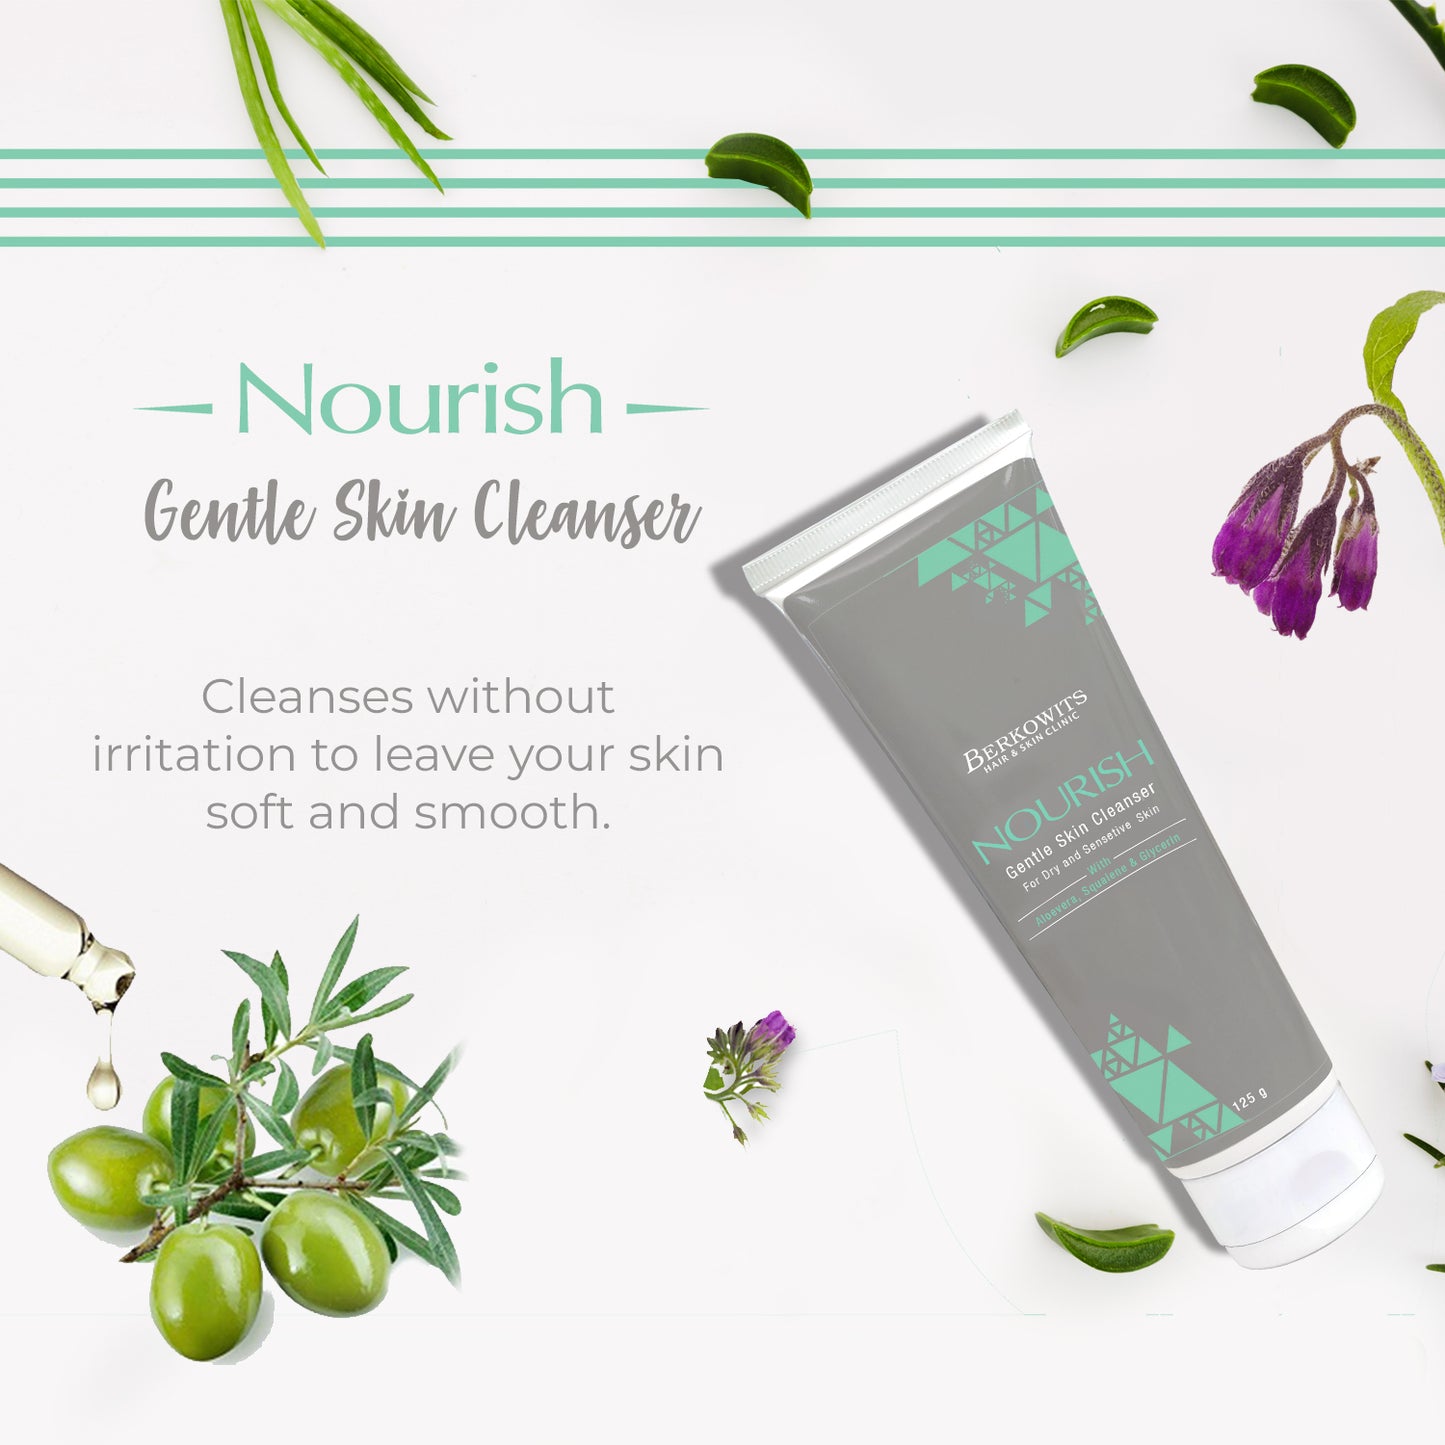 Berkowits Nourish Gentle Skin Cleanser For Dry & Sensitive Skin (125g)